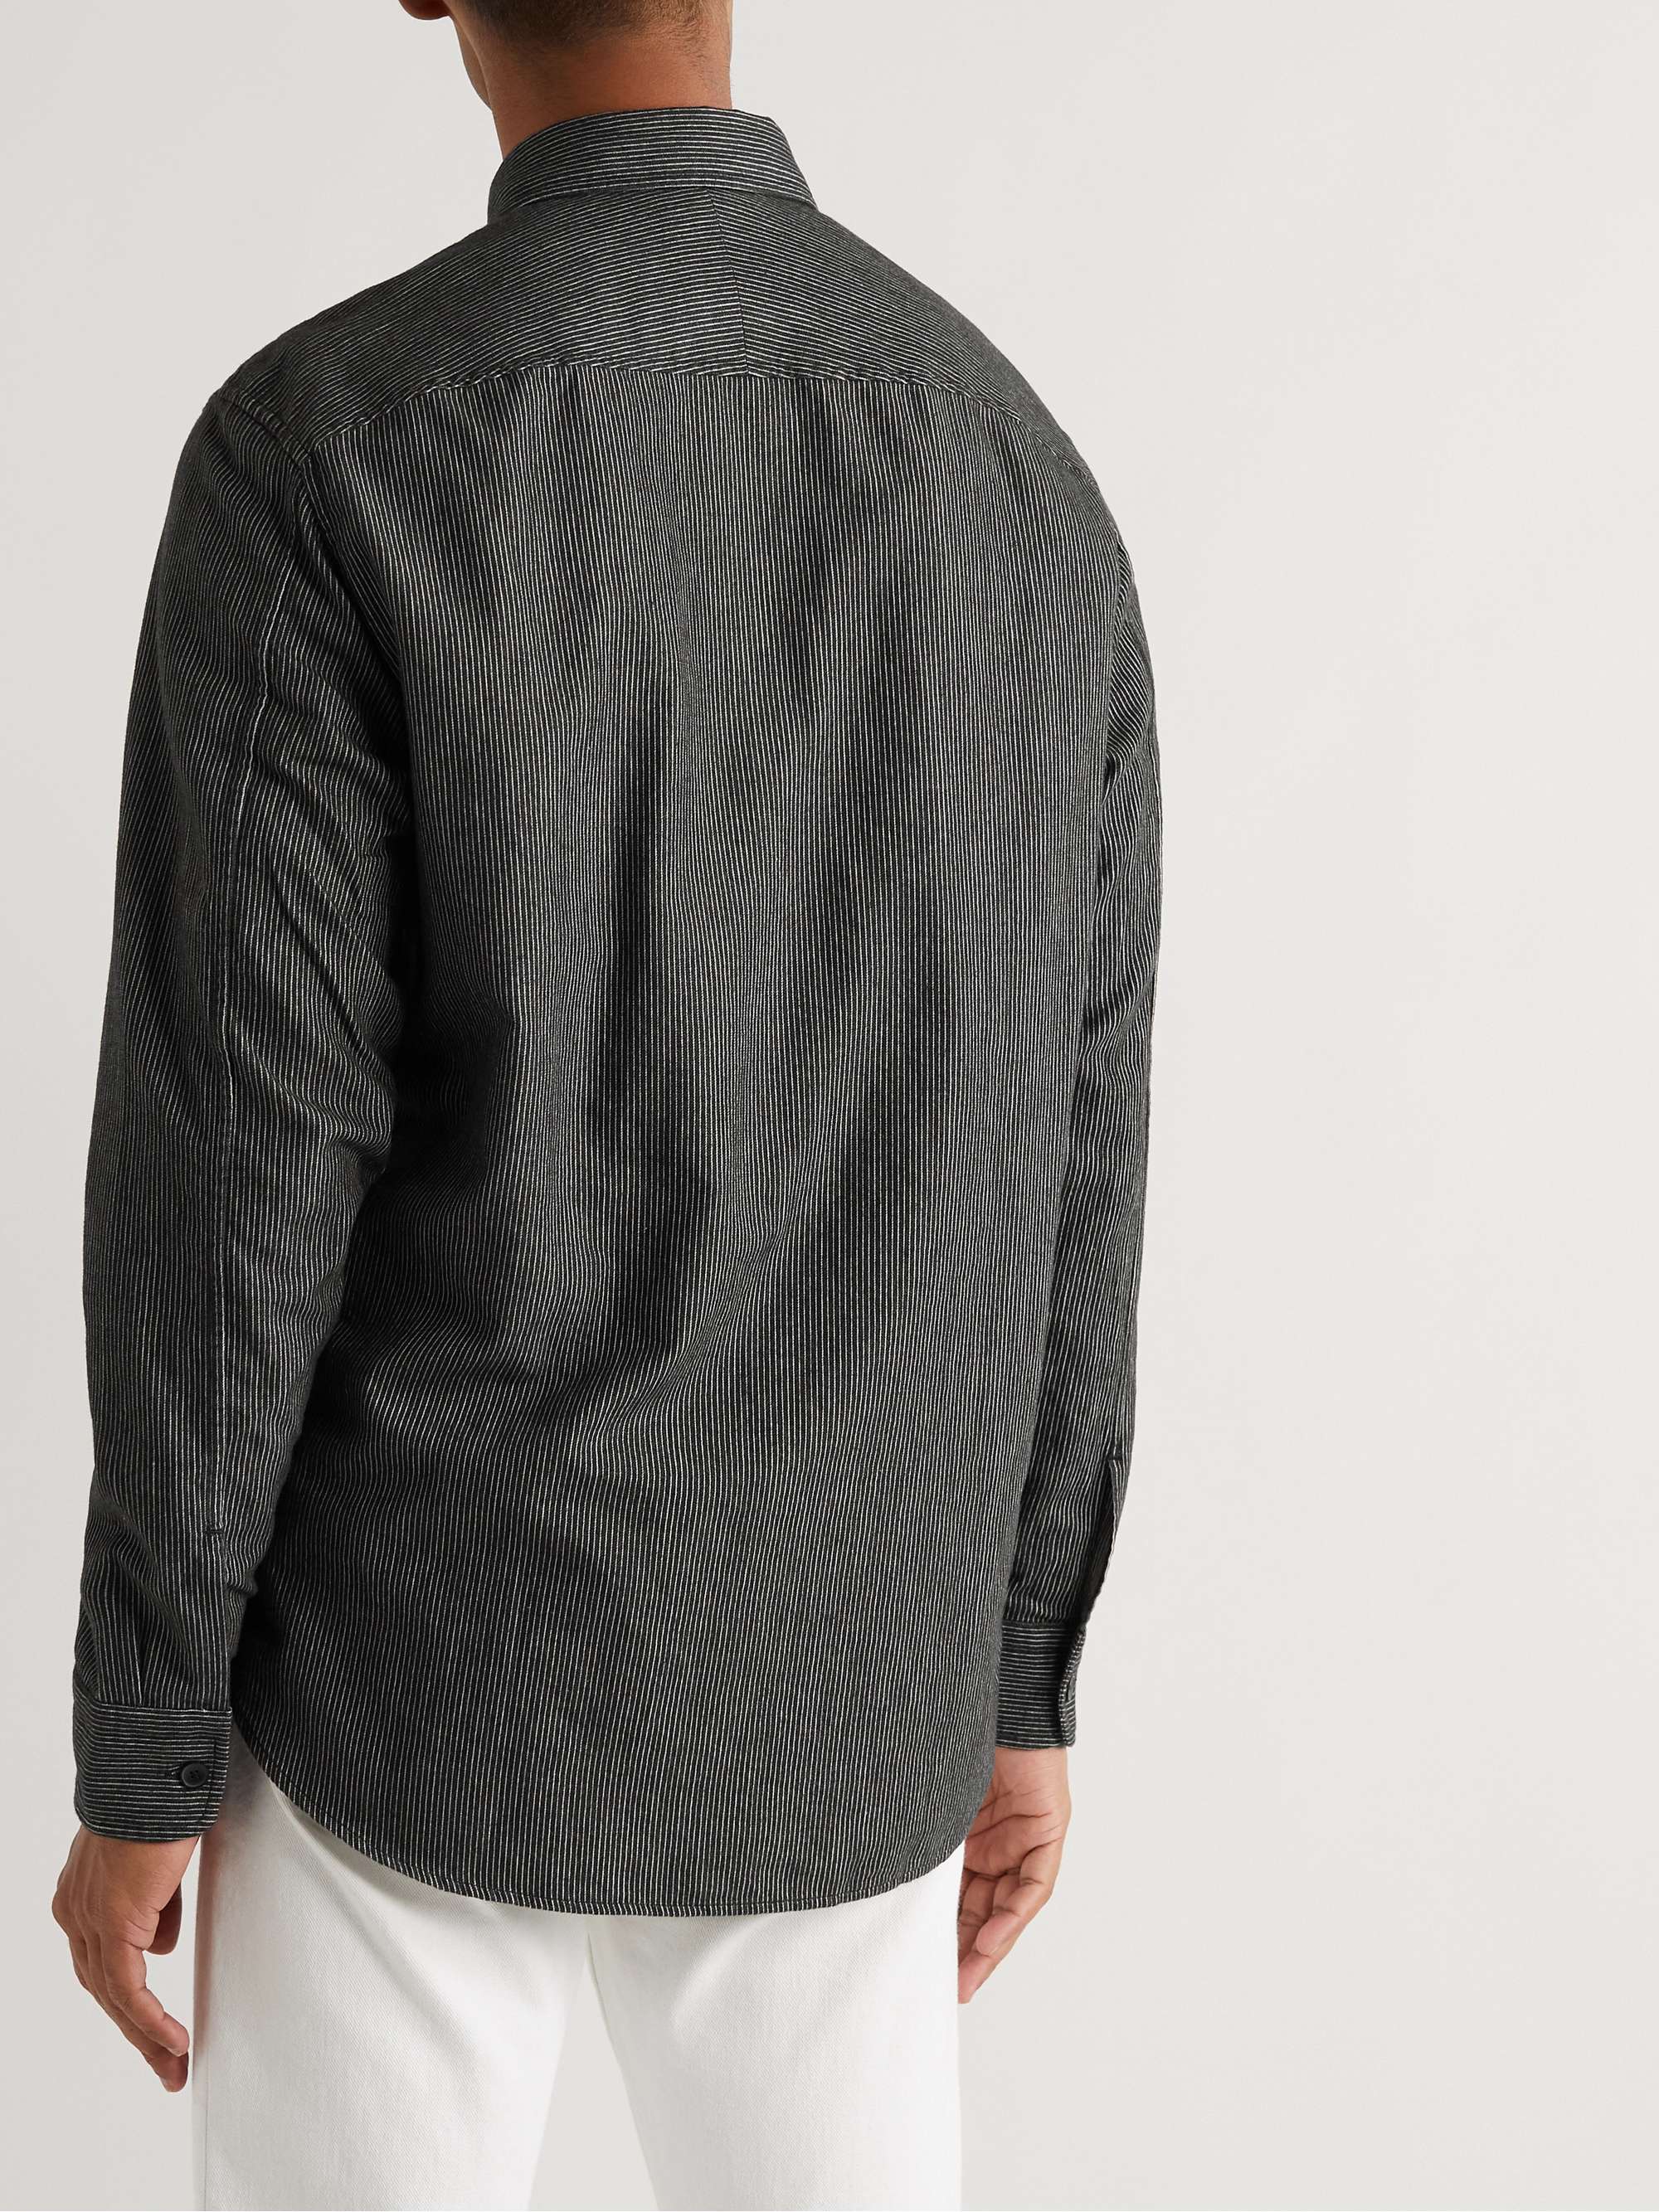 MR P. Pinstriped Cotton-Flannel Shirt